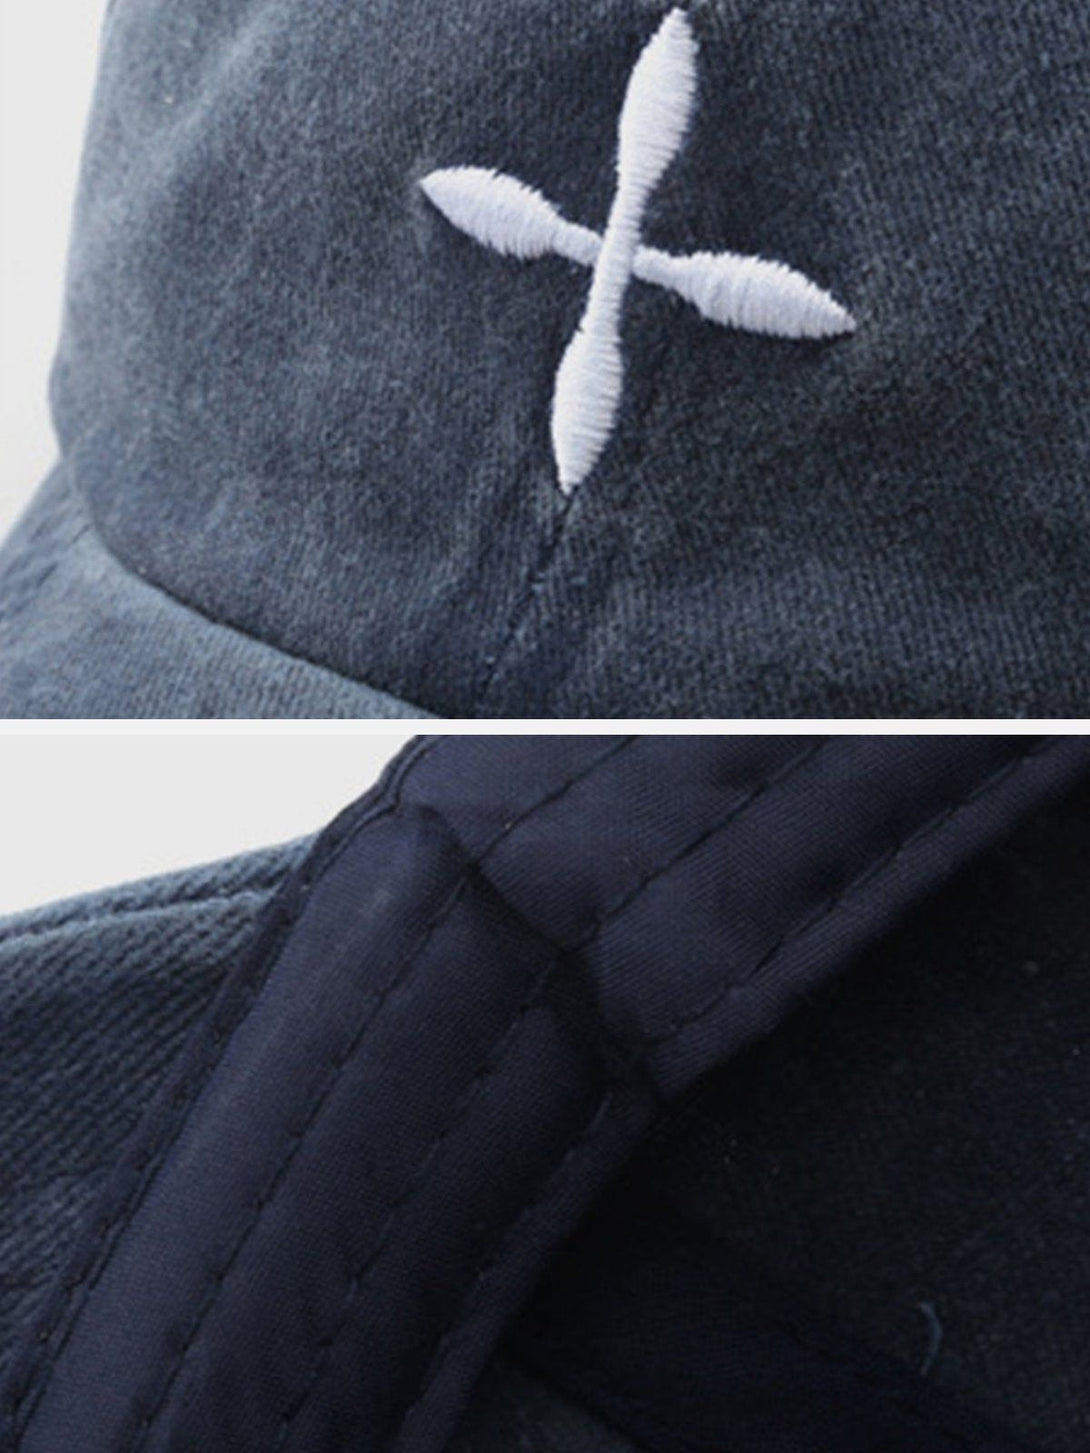 Majesda® - Embroidery Crucifix Baseball Cap- Outfit Ideas - Streetwear Fashion - majesda.com